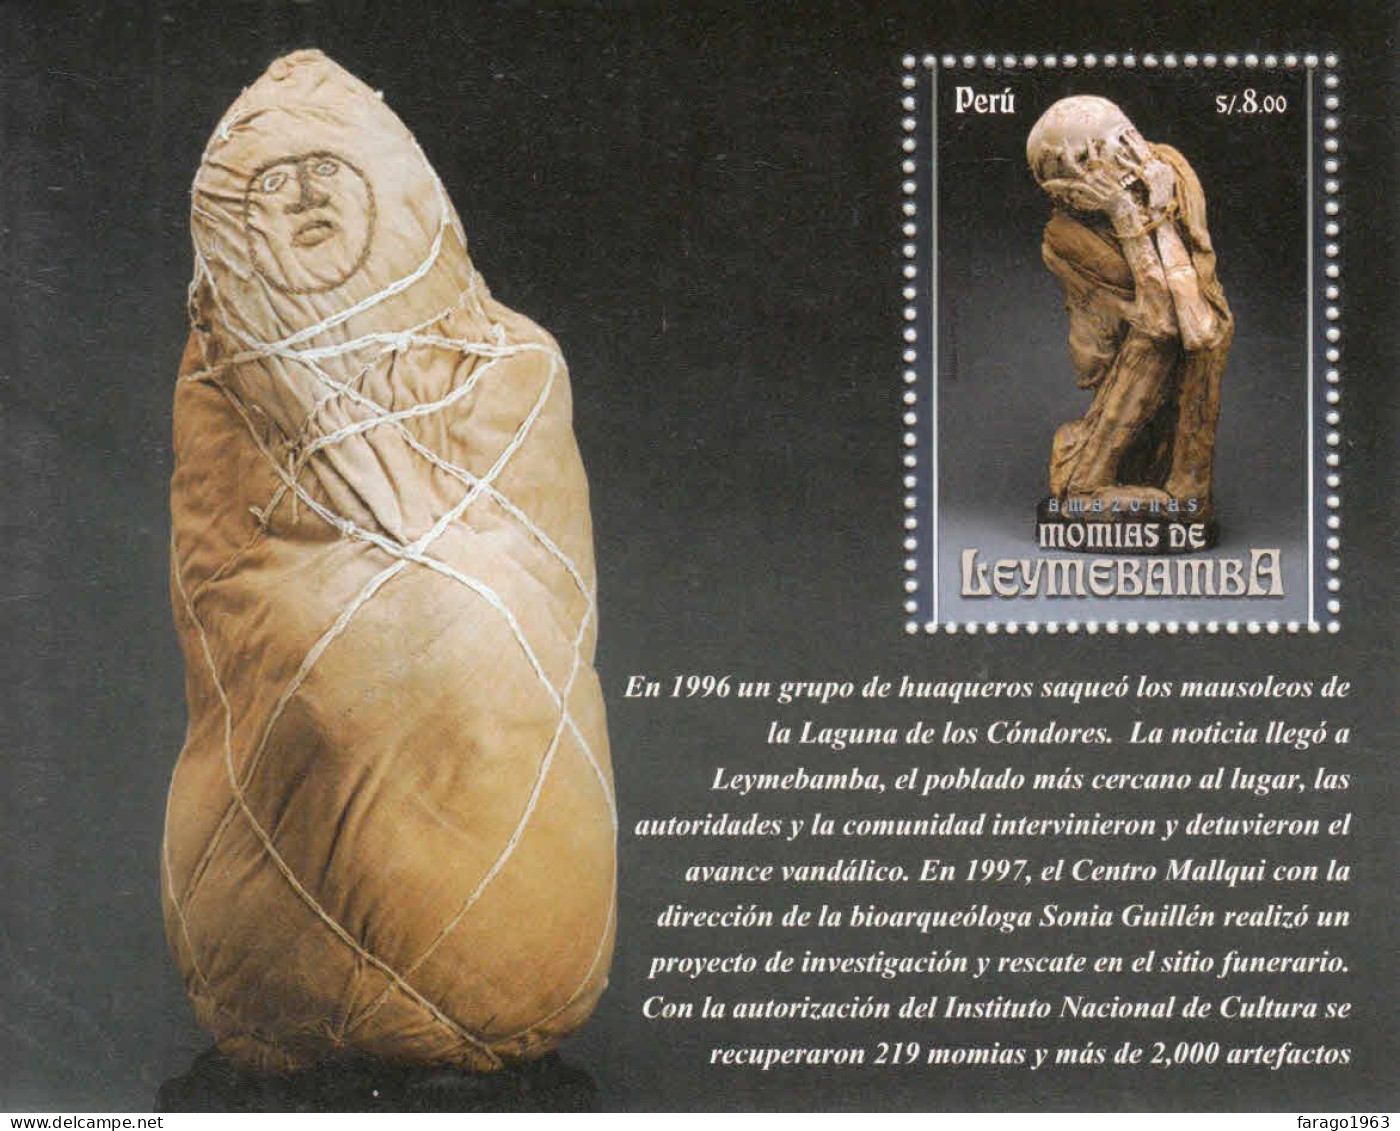 2014 Peru Leymebamba Mummies Archaeology  Souvenir Sheet MNH - Pérou